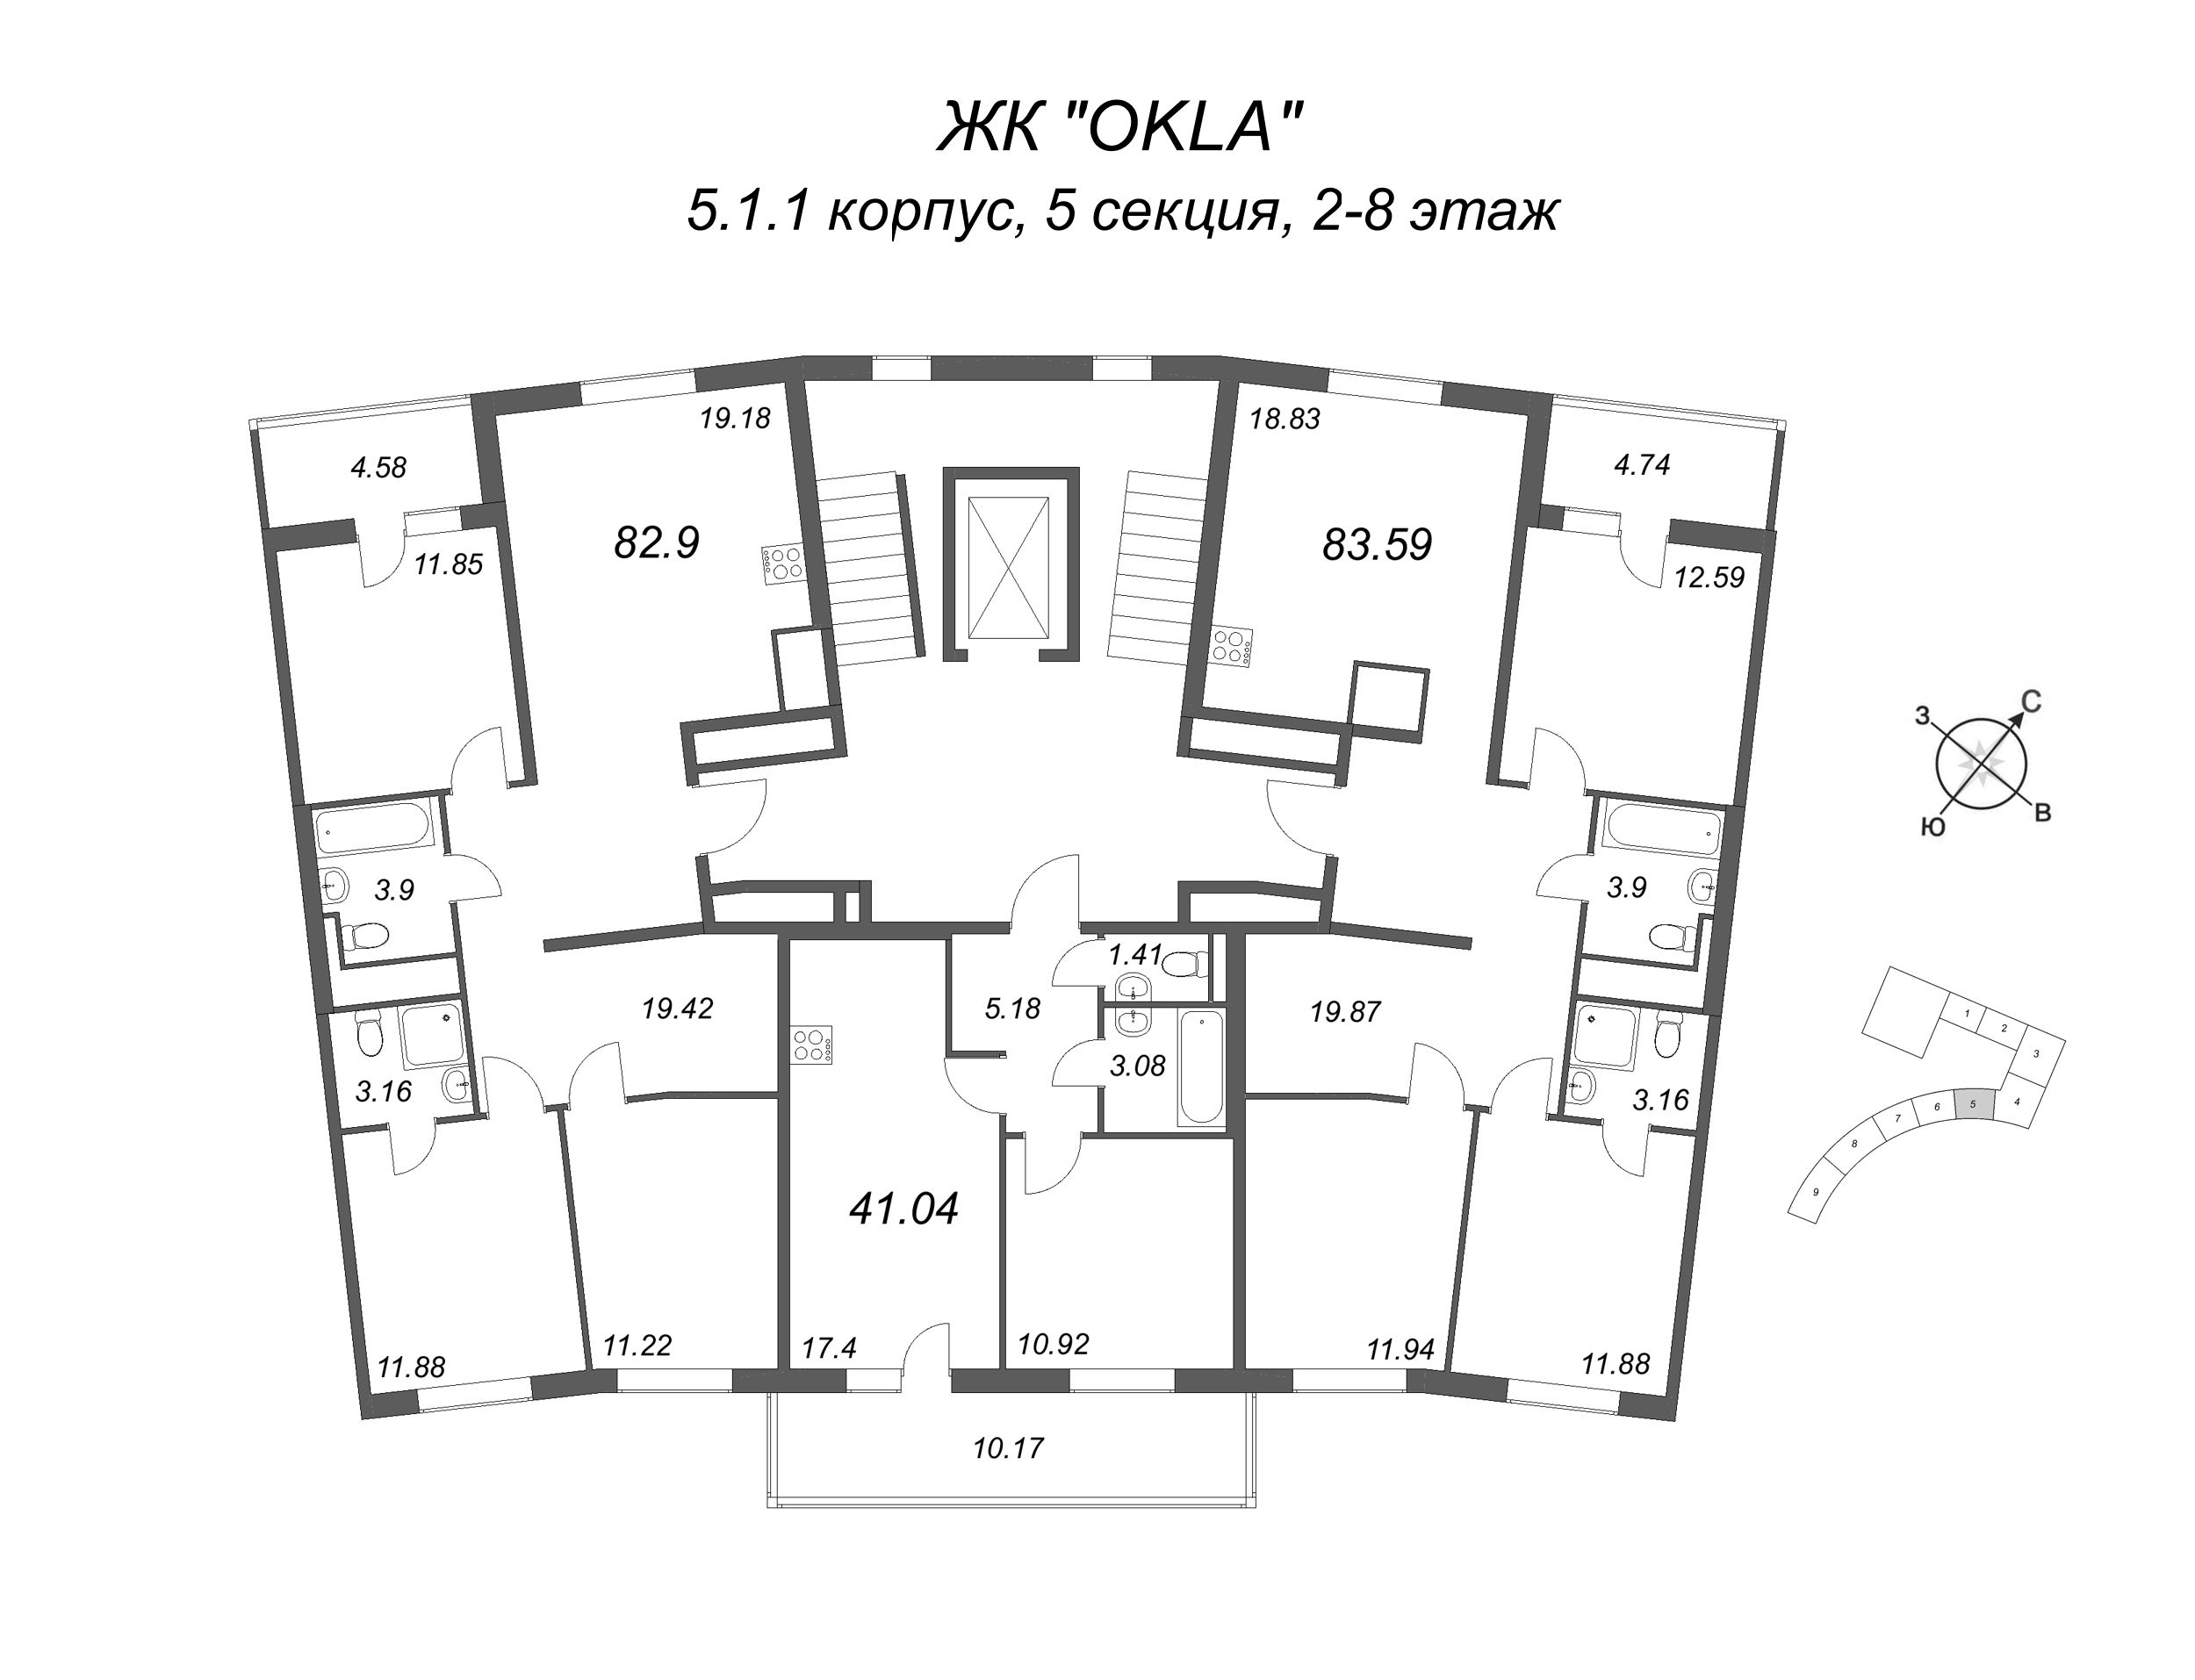 4-комнатная (Евро) квартира, 85.01 м² - планировка этажа